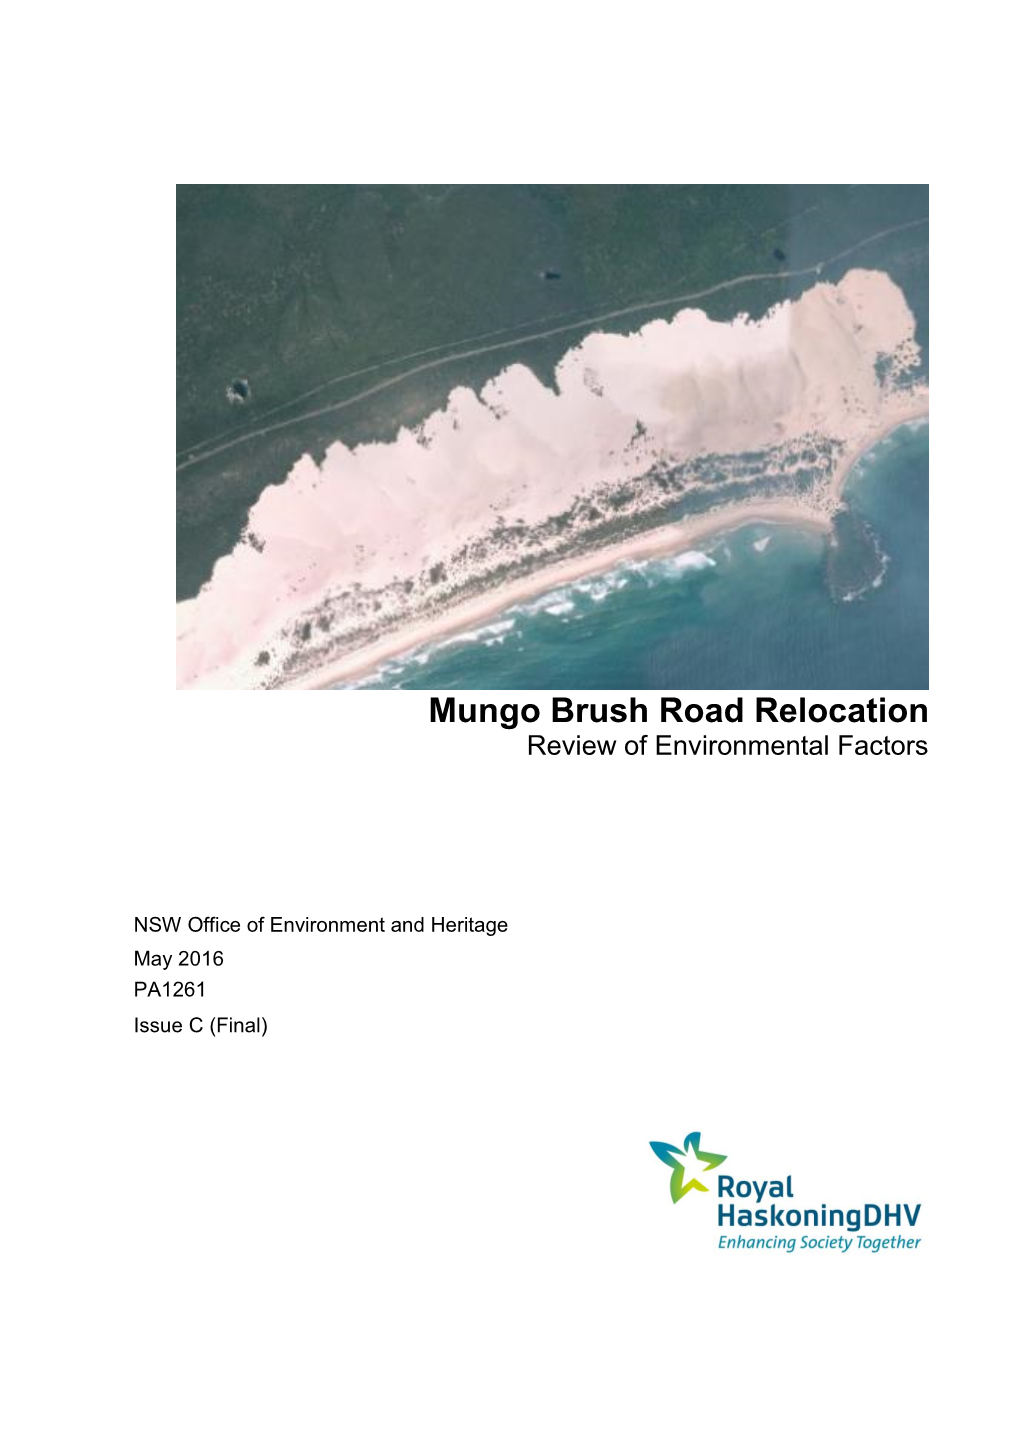 Mungo Brush Road Relocation: Review of Environmental Factors